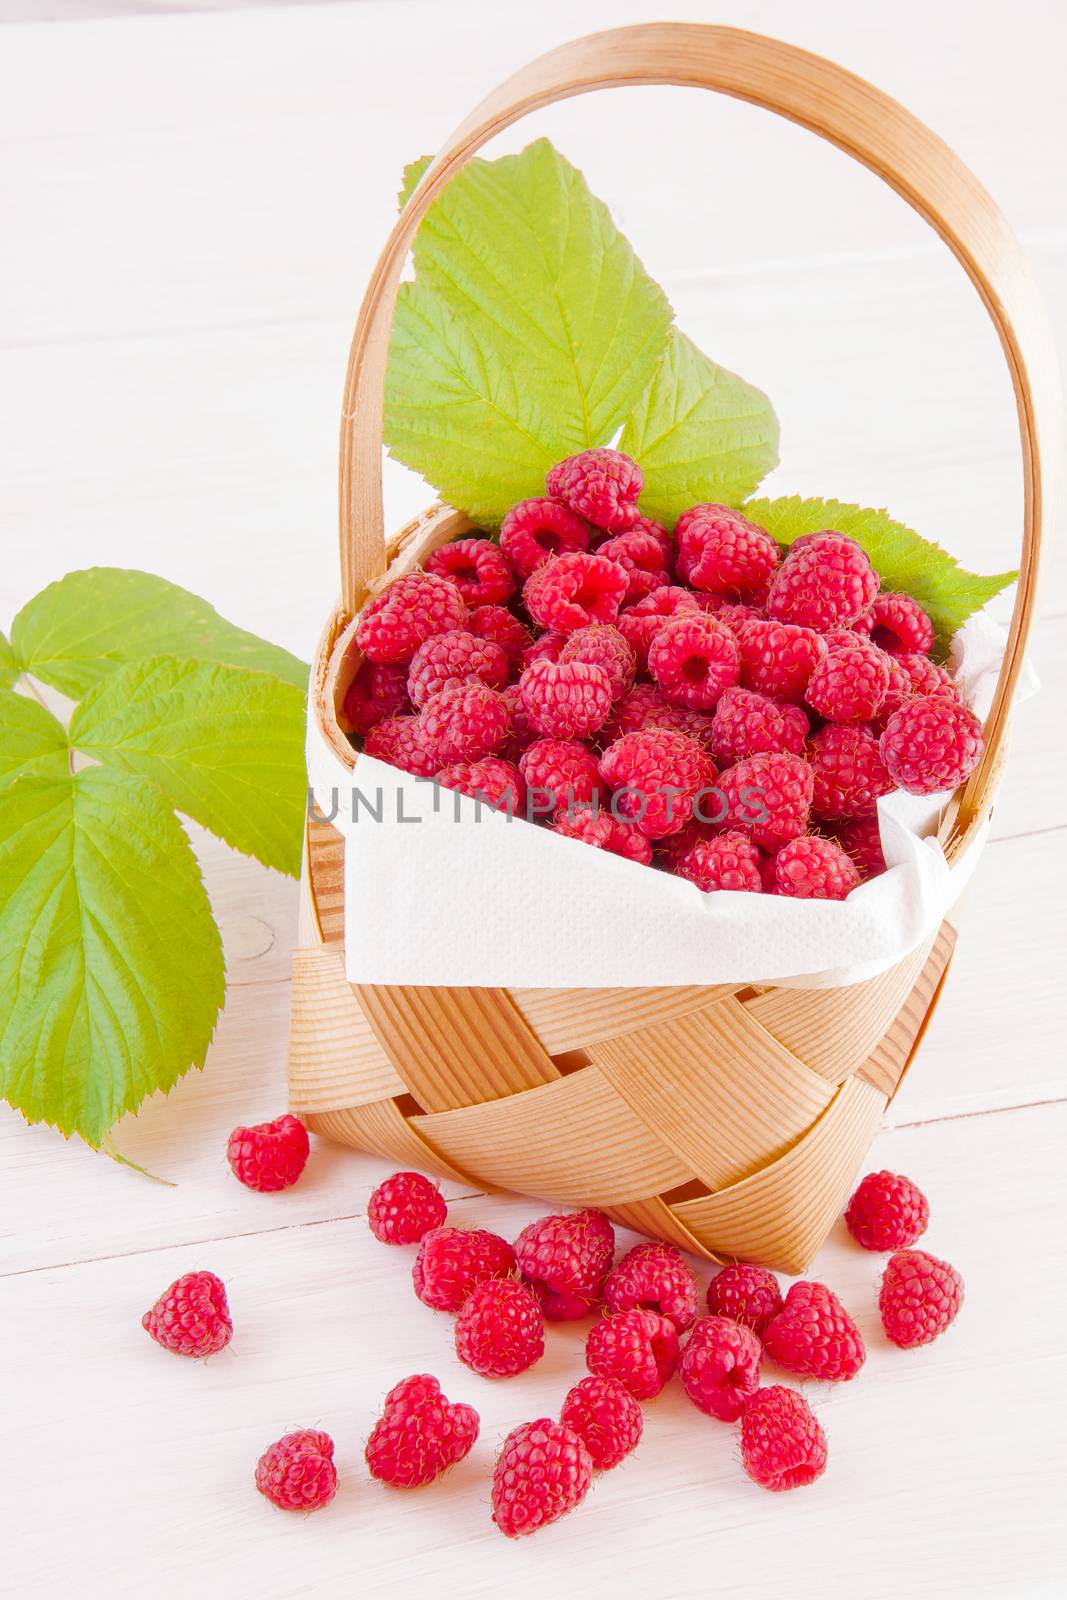 Raspberries in a basket by Gbuglok